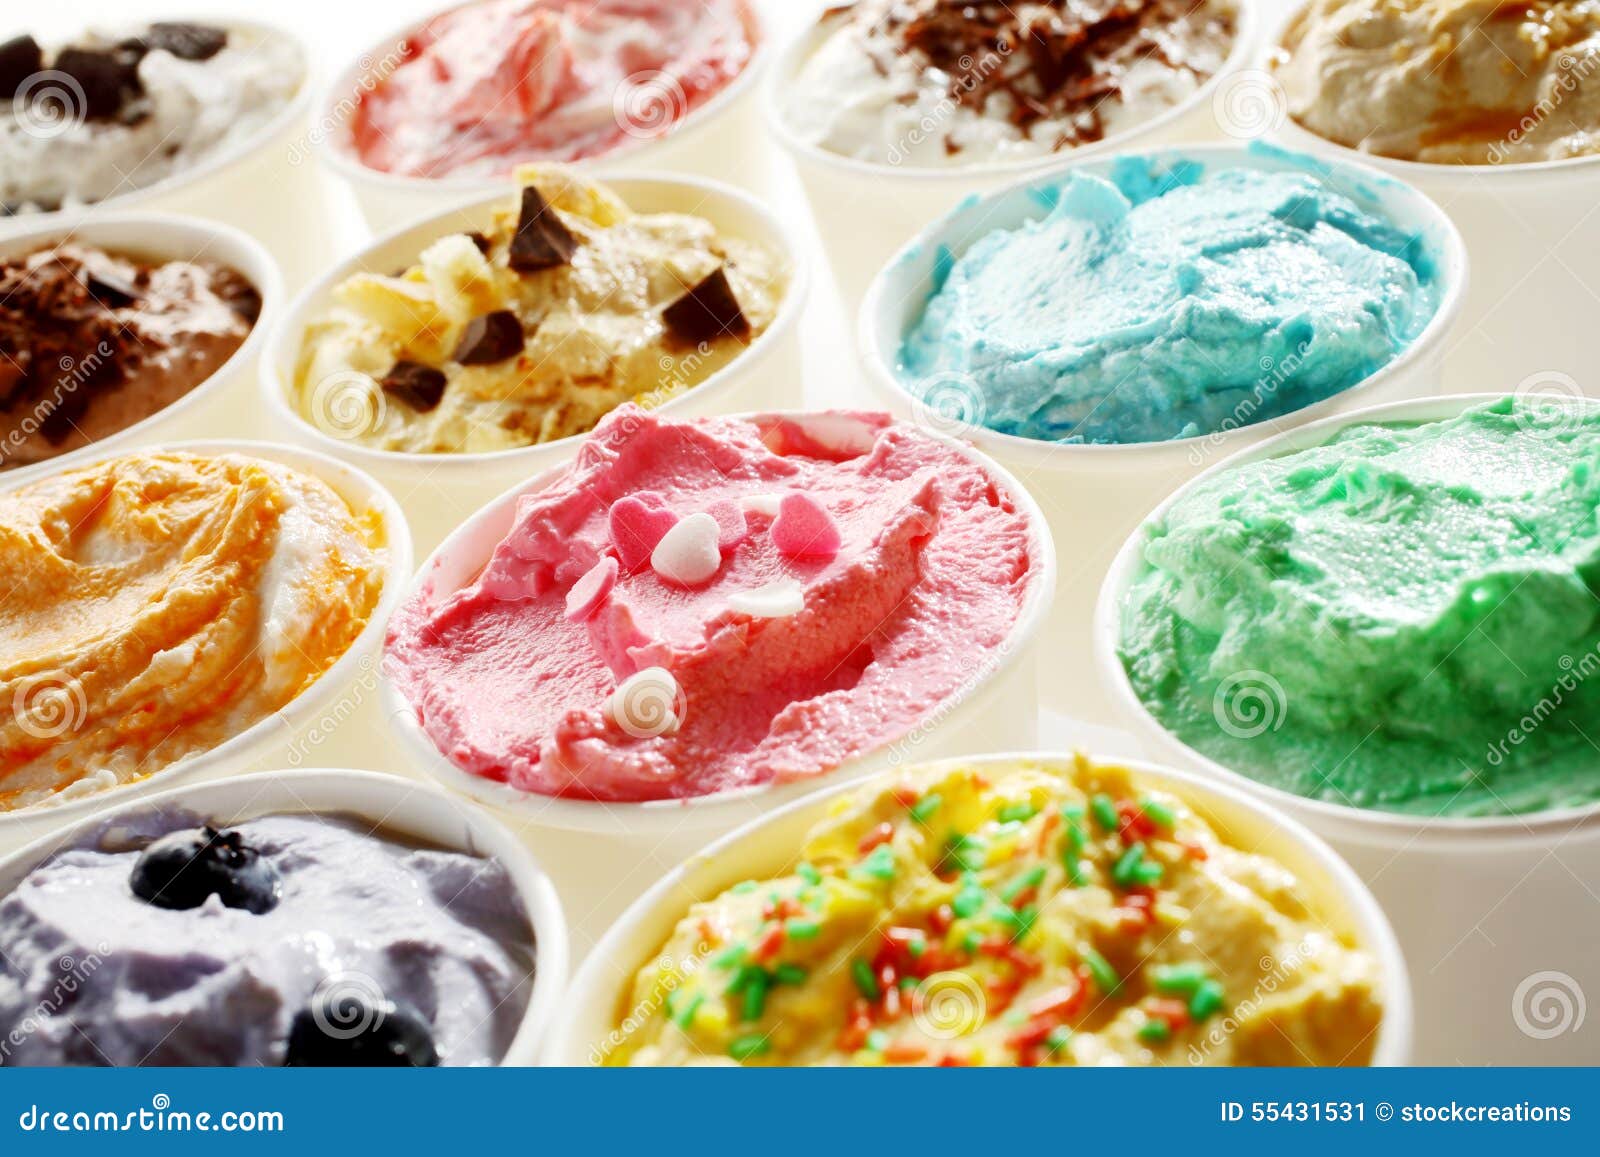 tasty summer ice cream in different flavors